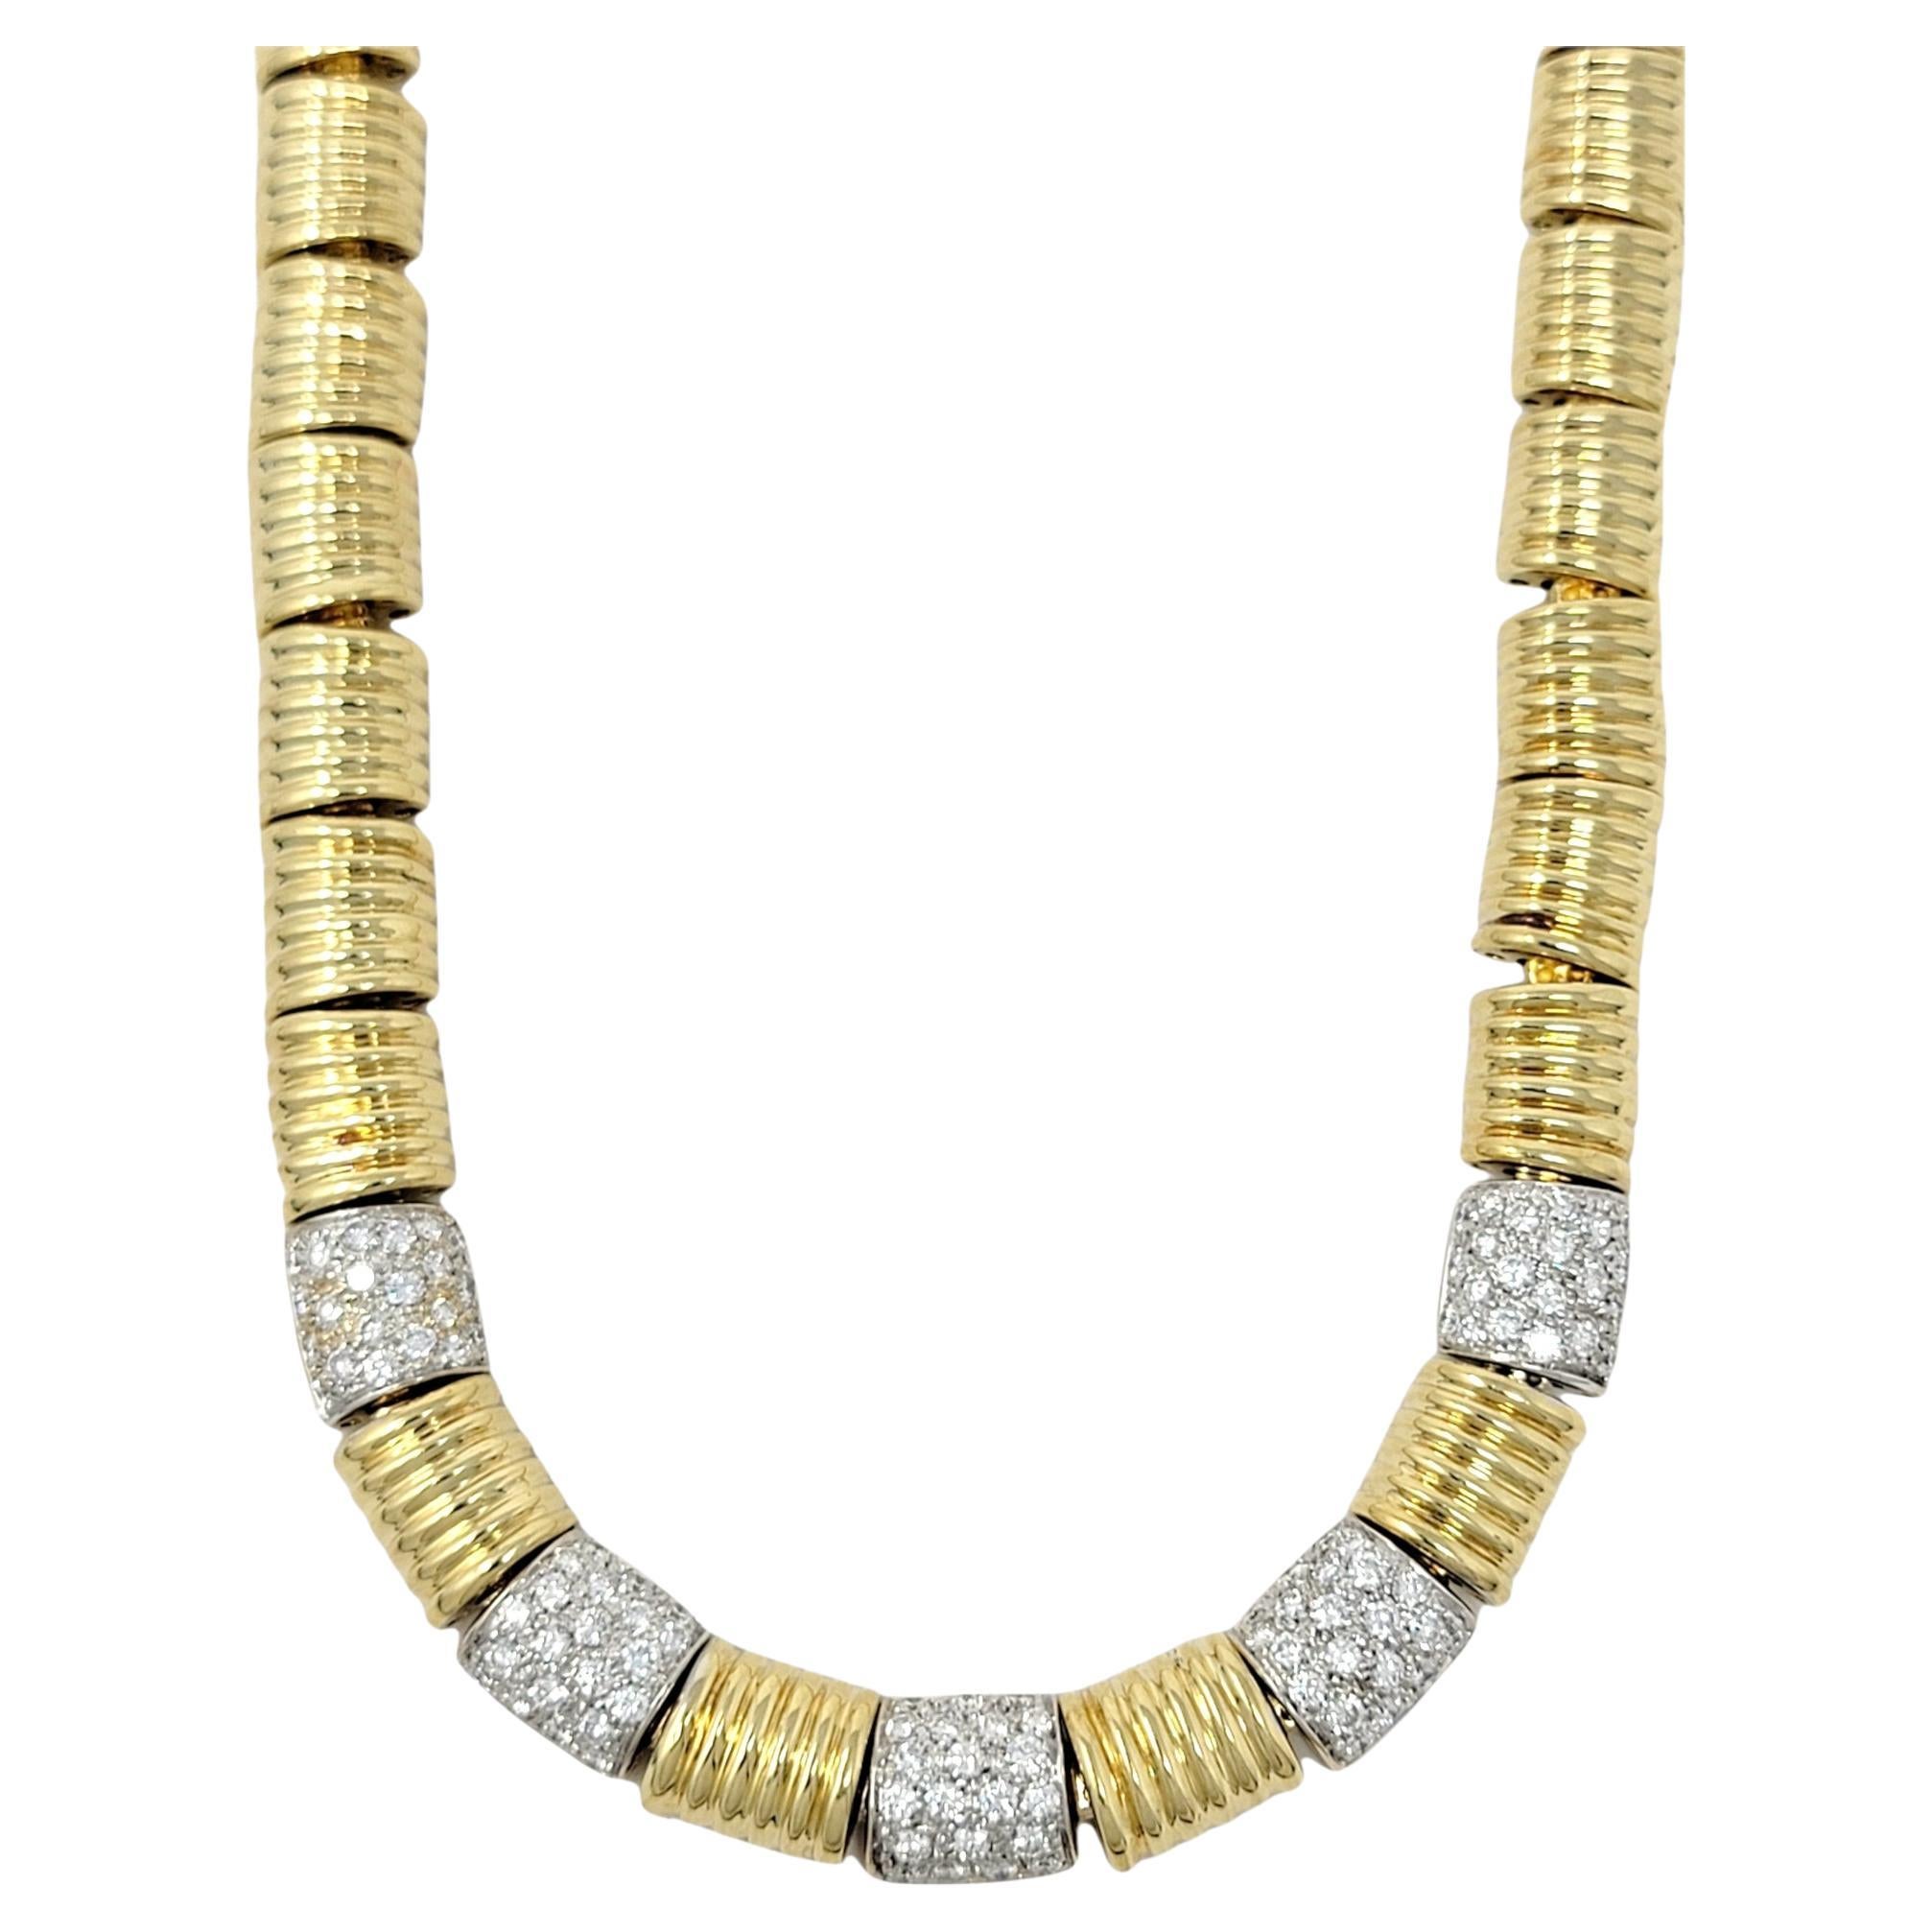 18 Karat Yellow and White Gold Ridged Link Choker Necklace with Pave Diamonds